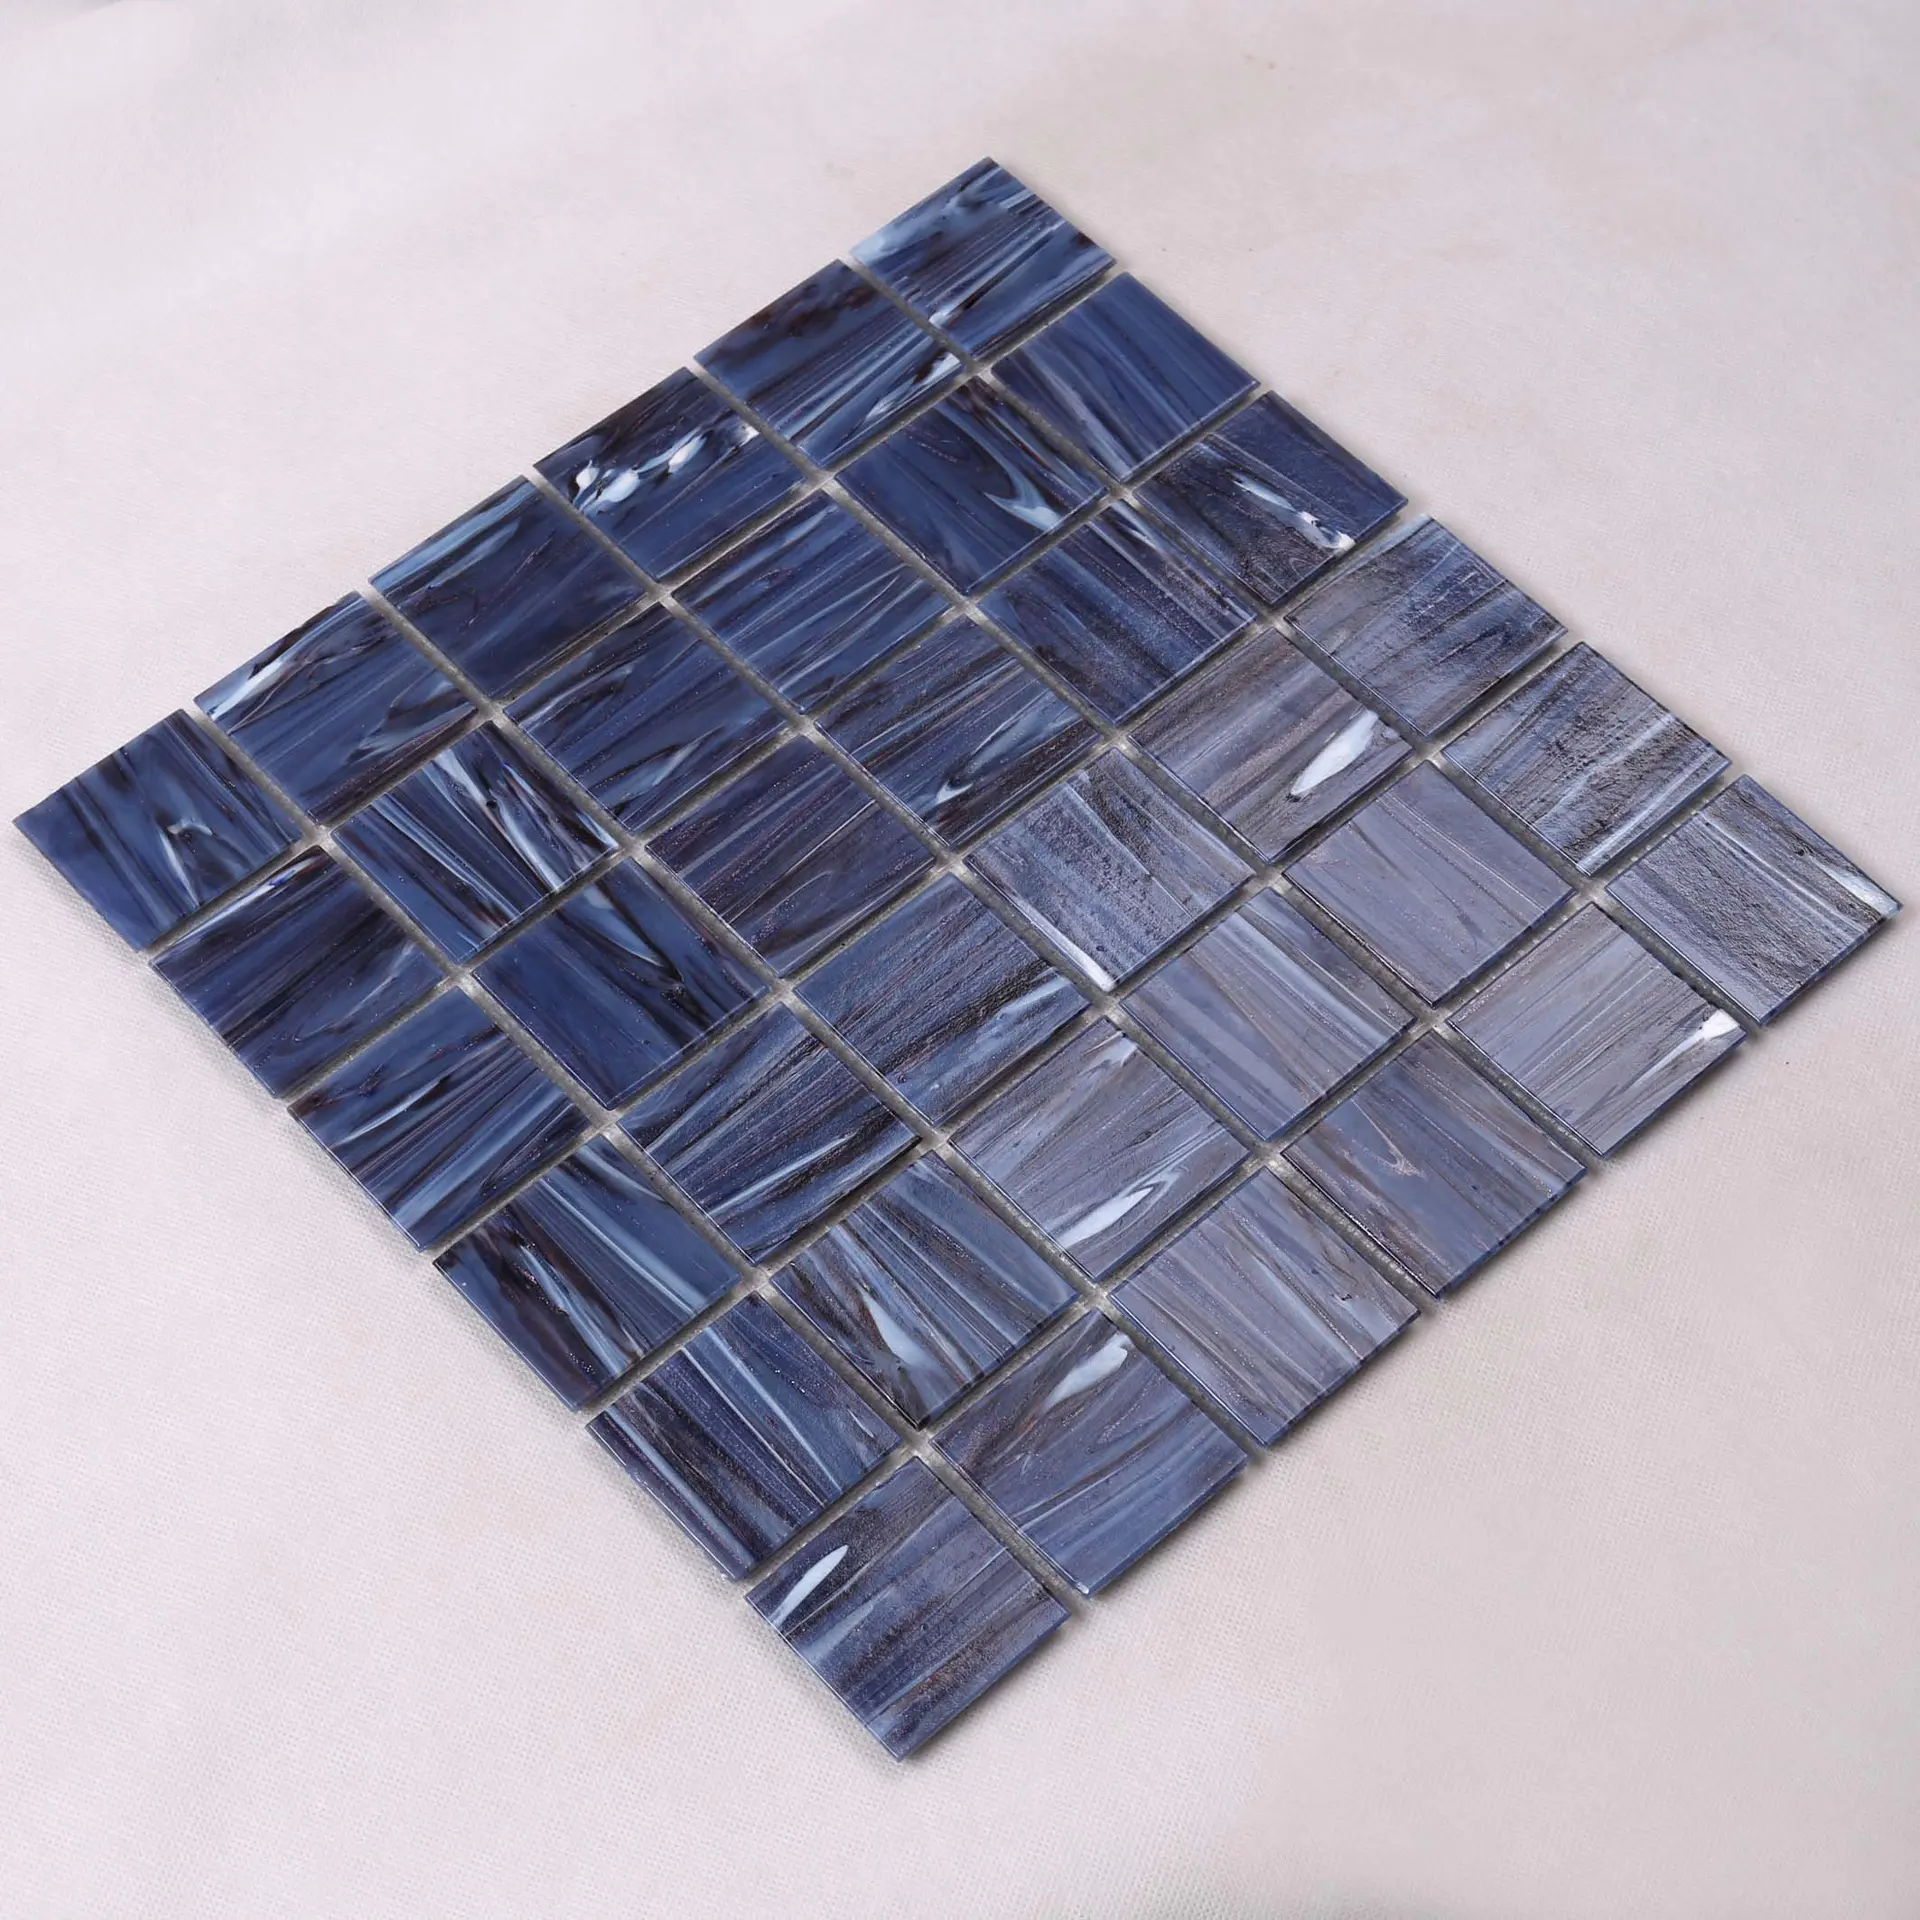 ceramic pool mosaic designs floor factory price for spa